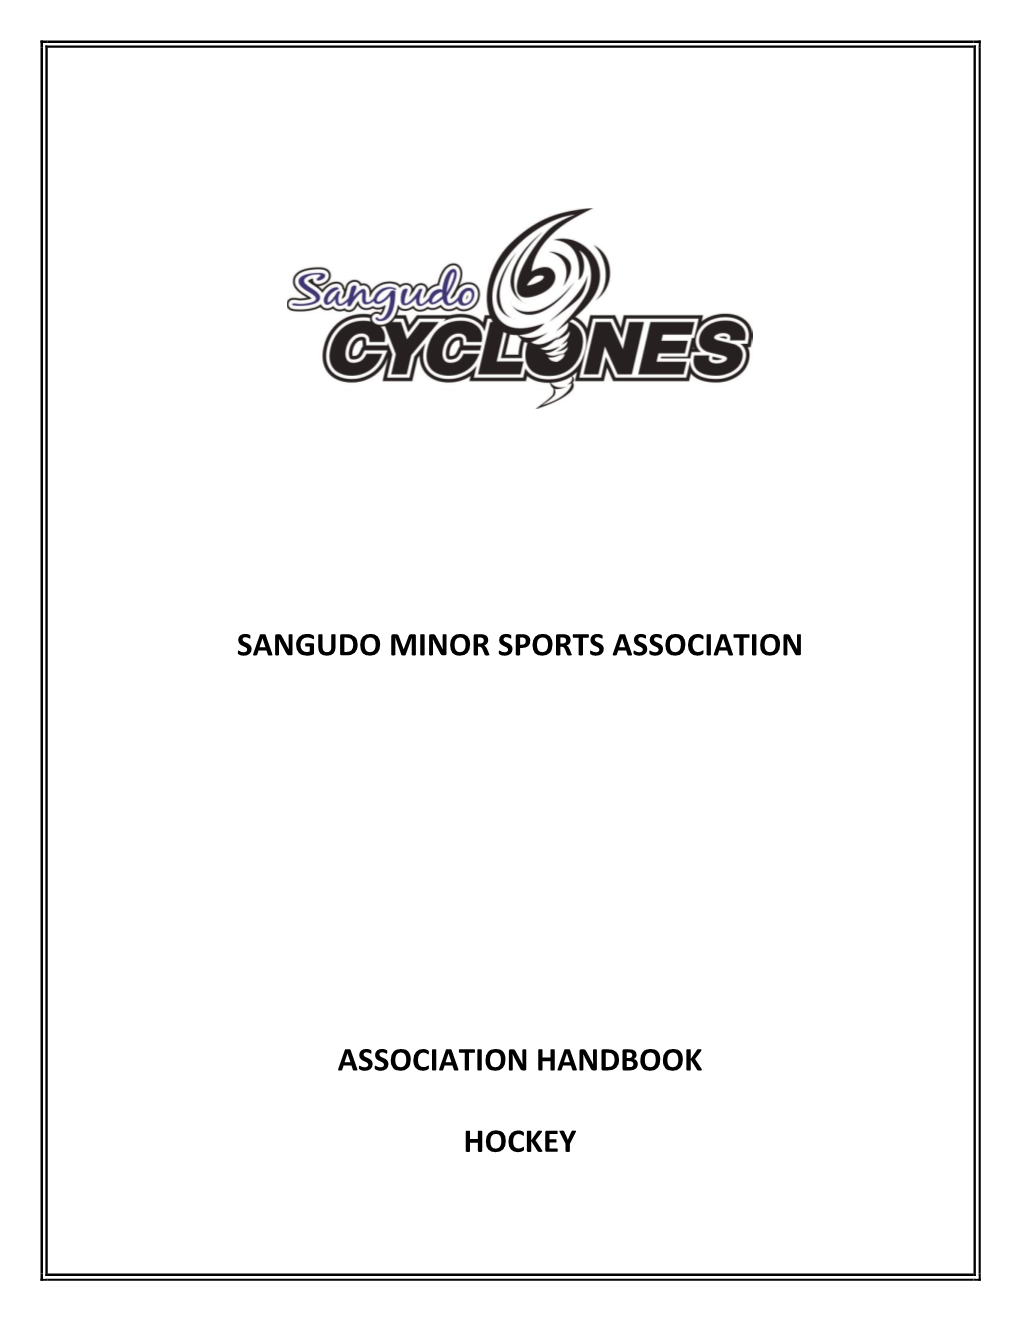 Sangudo Minor Sports Association